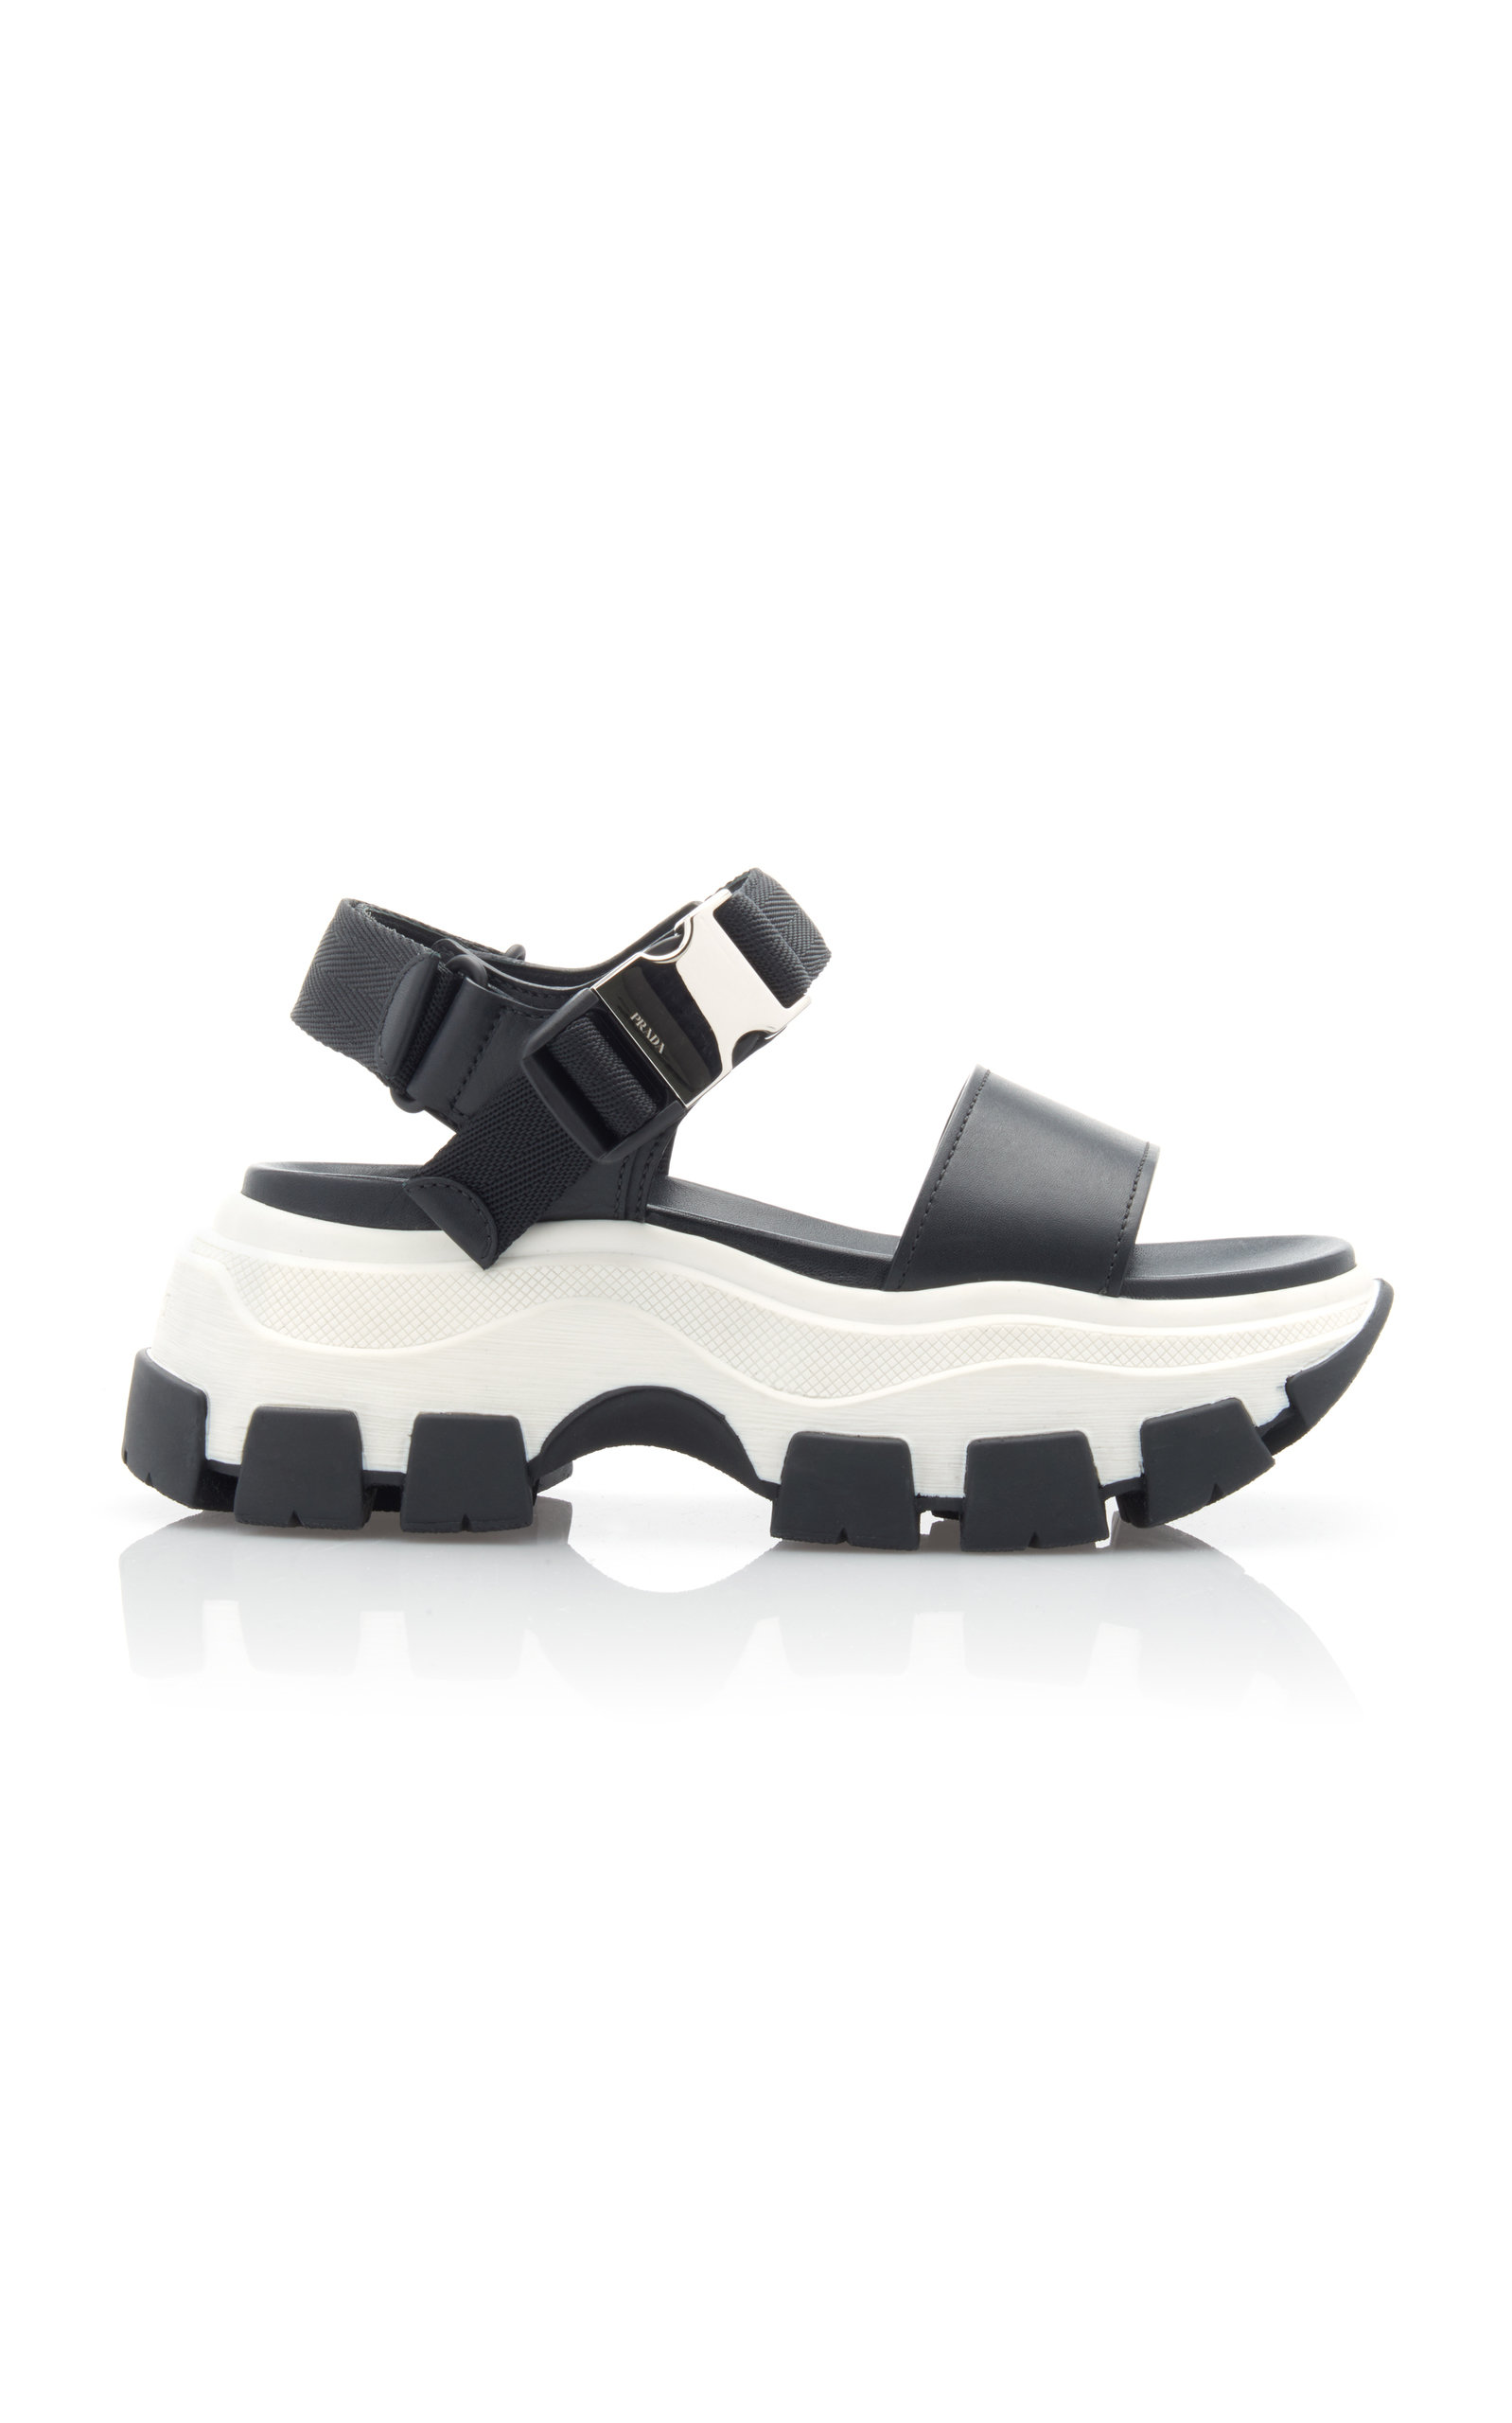 Prada - Buckled Leather And Rubber Sandals - Black/white - IT 39 - Moda Operandi